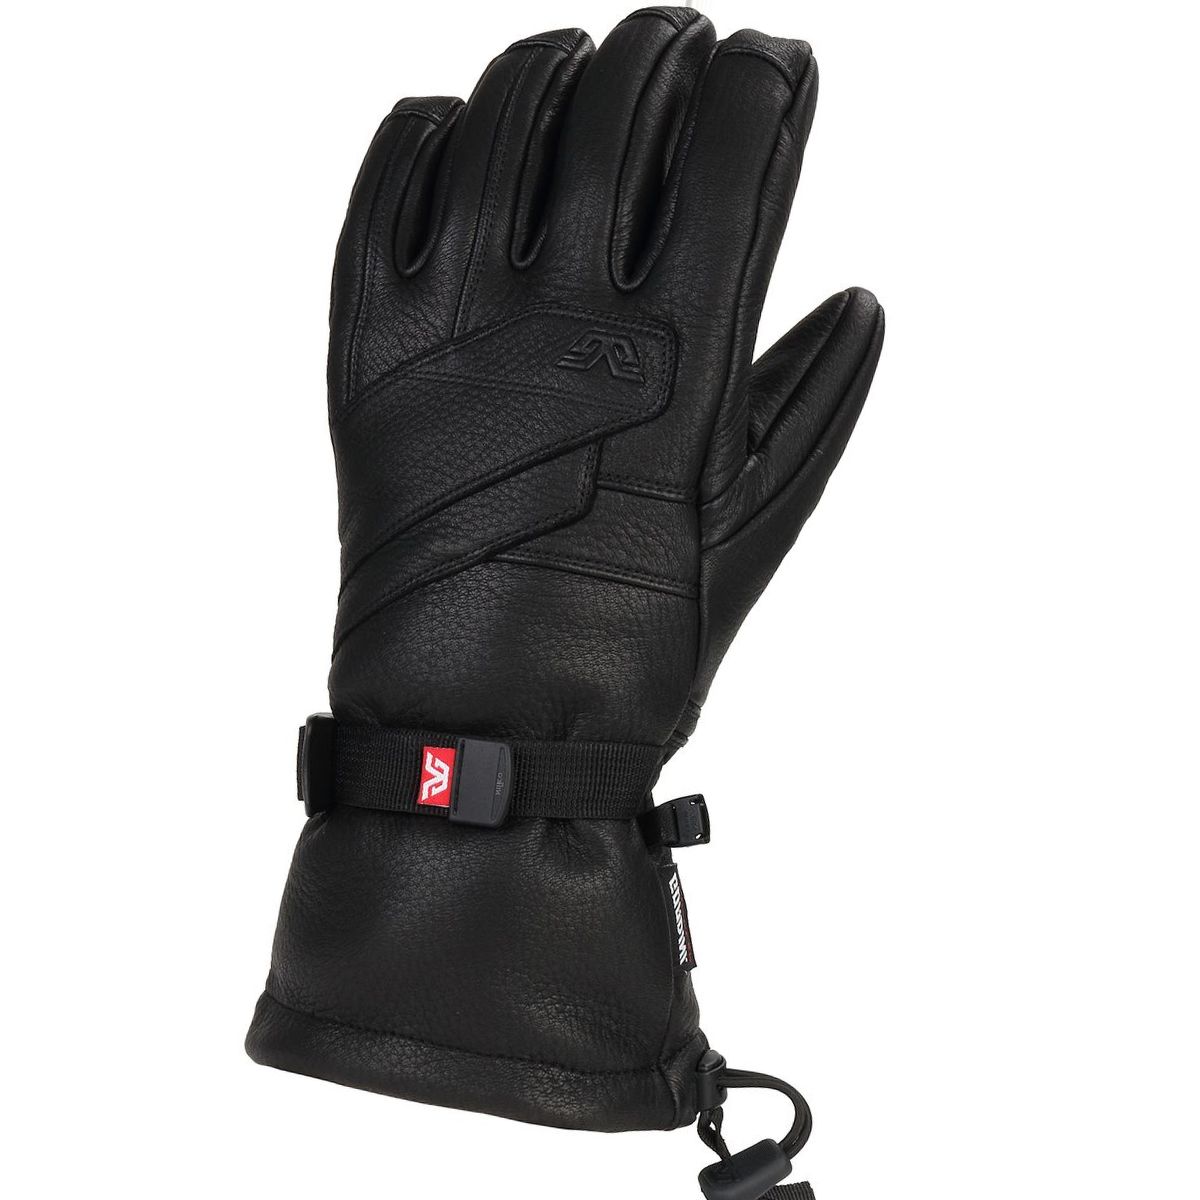 Gordini Antler Guantlet Glove - Men's